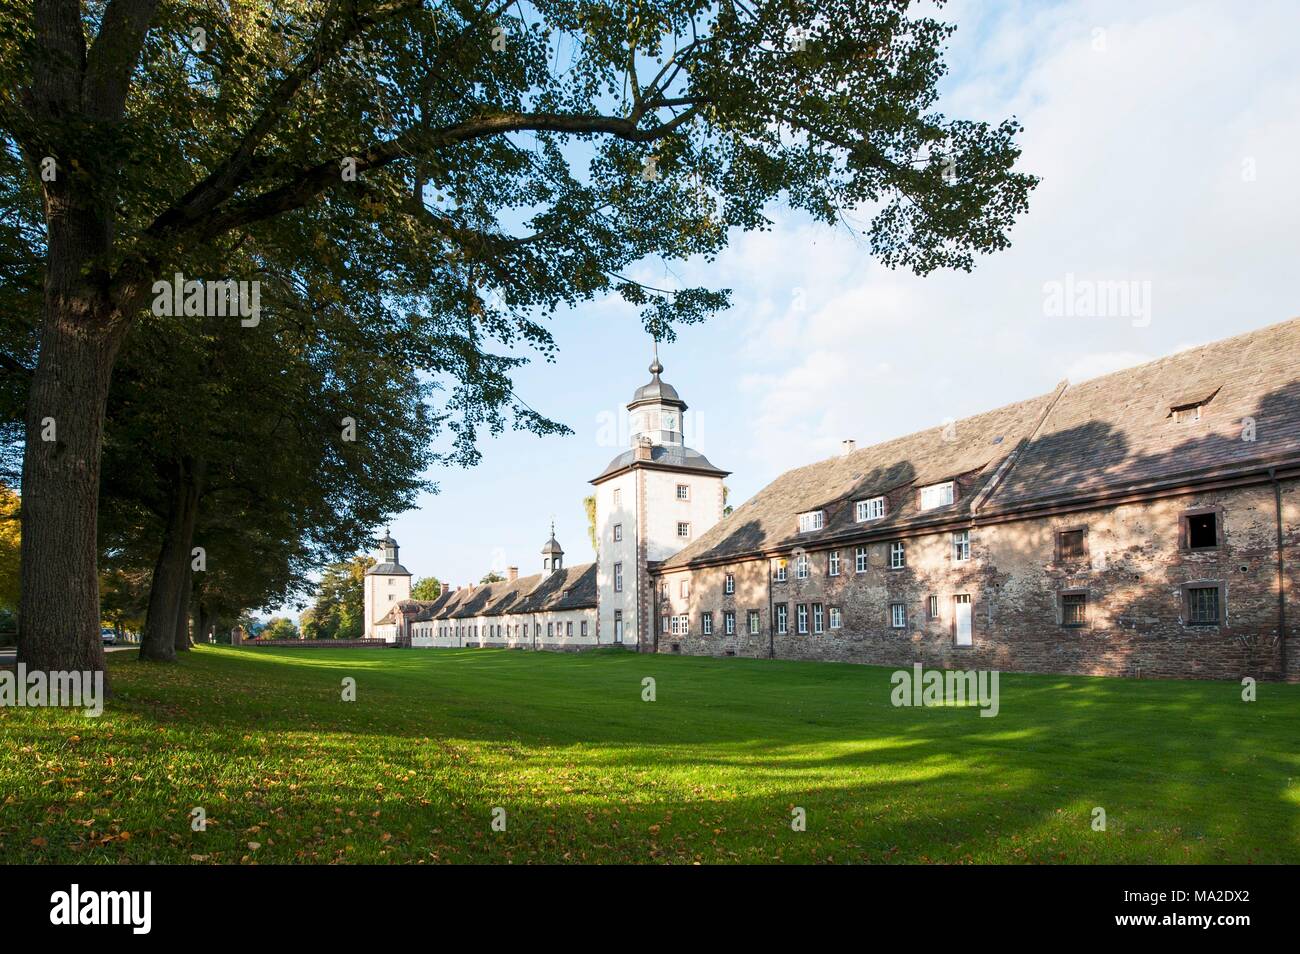 Schloss Corvey - Die äußere Bailey mit Türmen Stockfoto